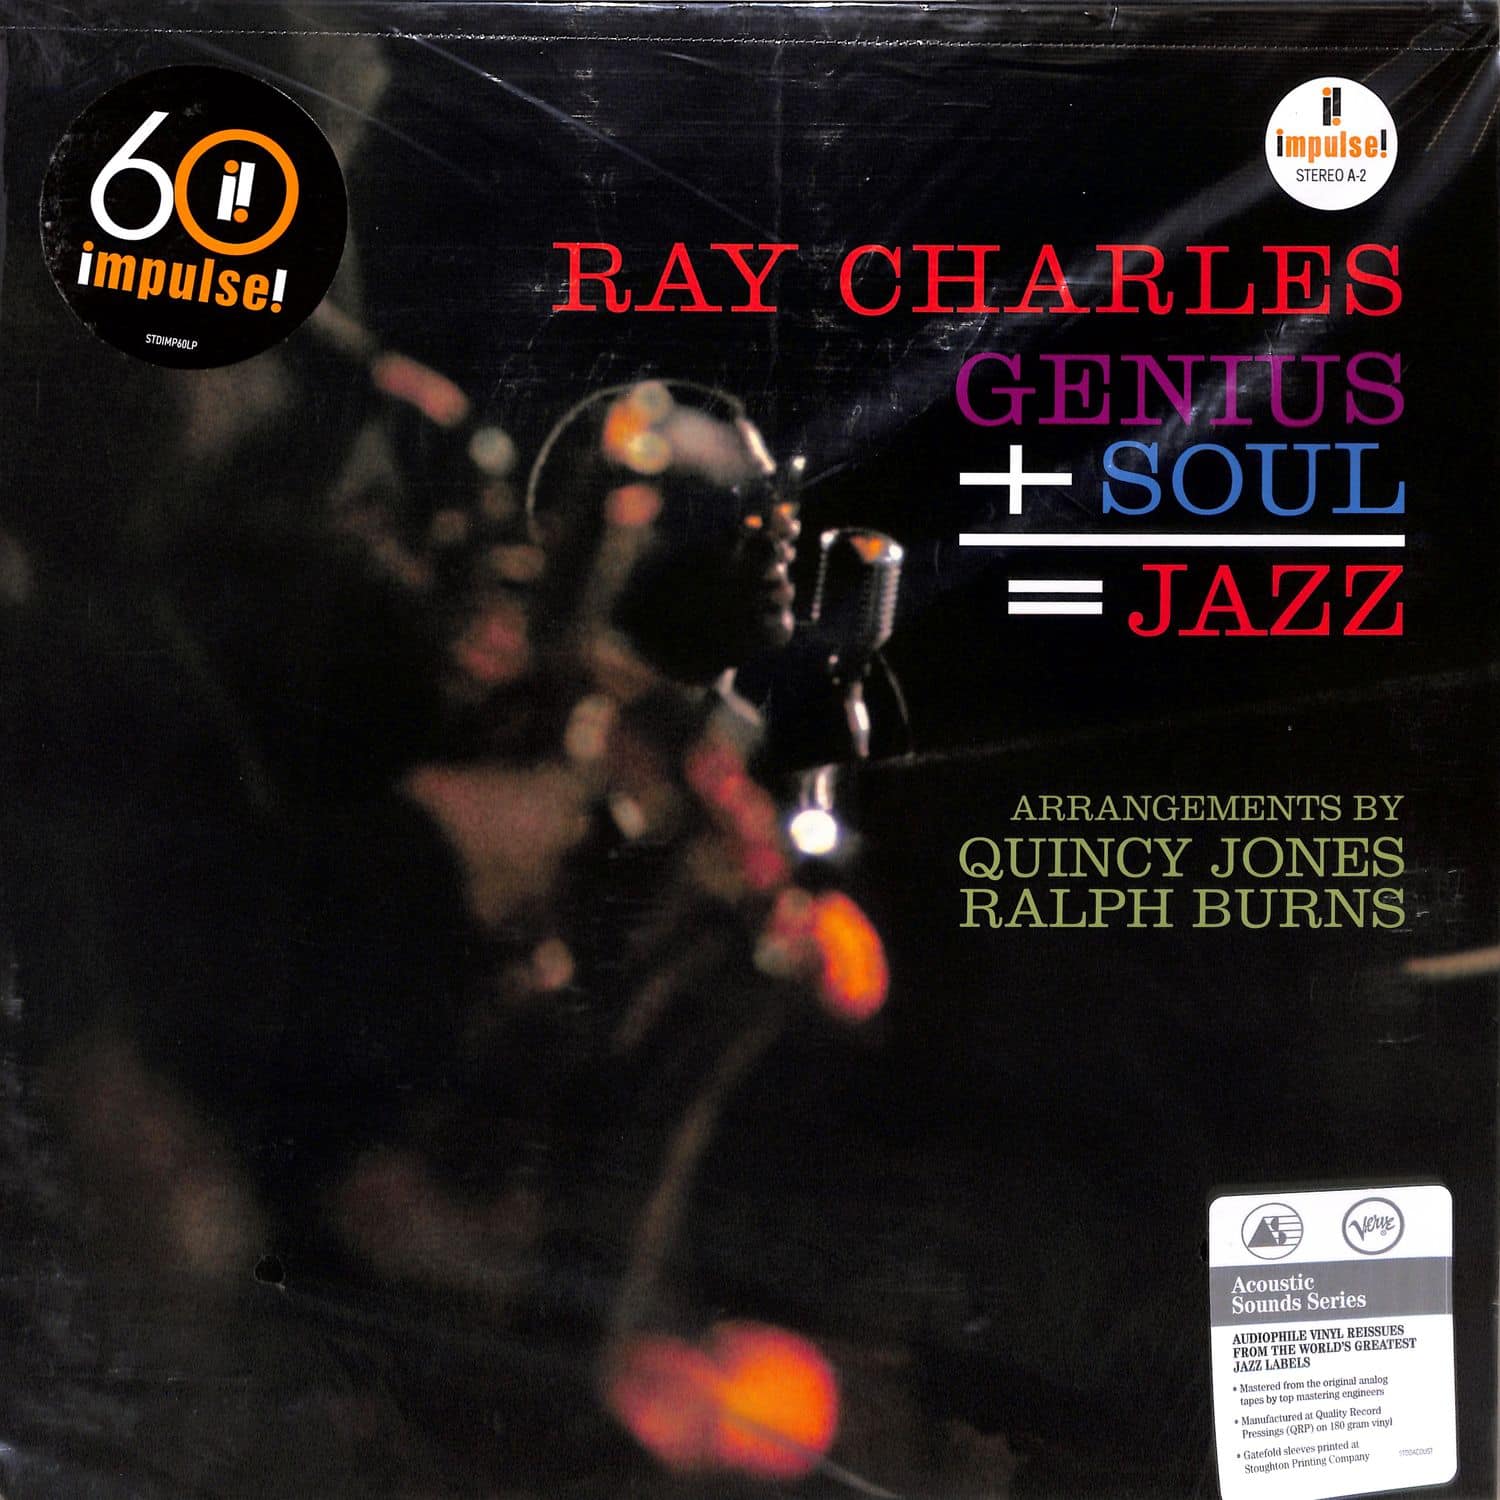 Ray Charles - GENIUS + SOUL = JAZZ 